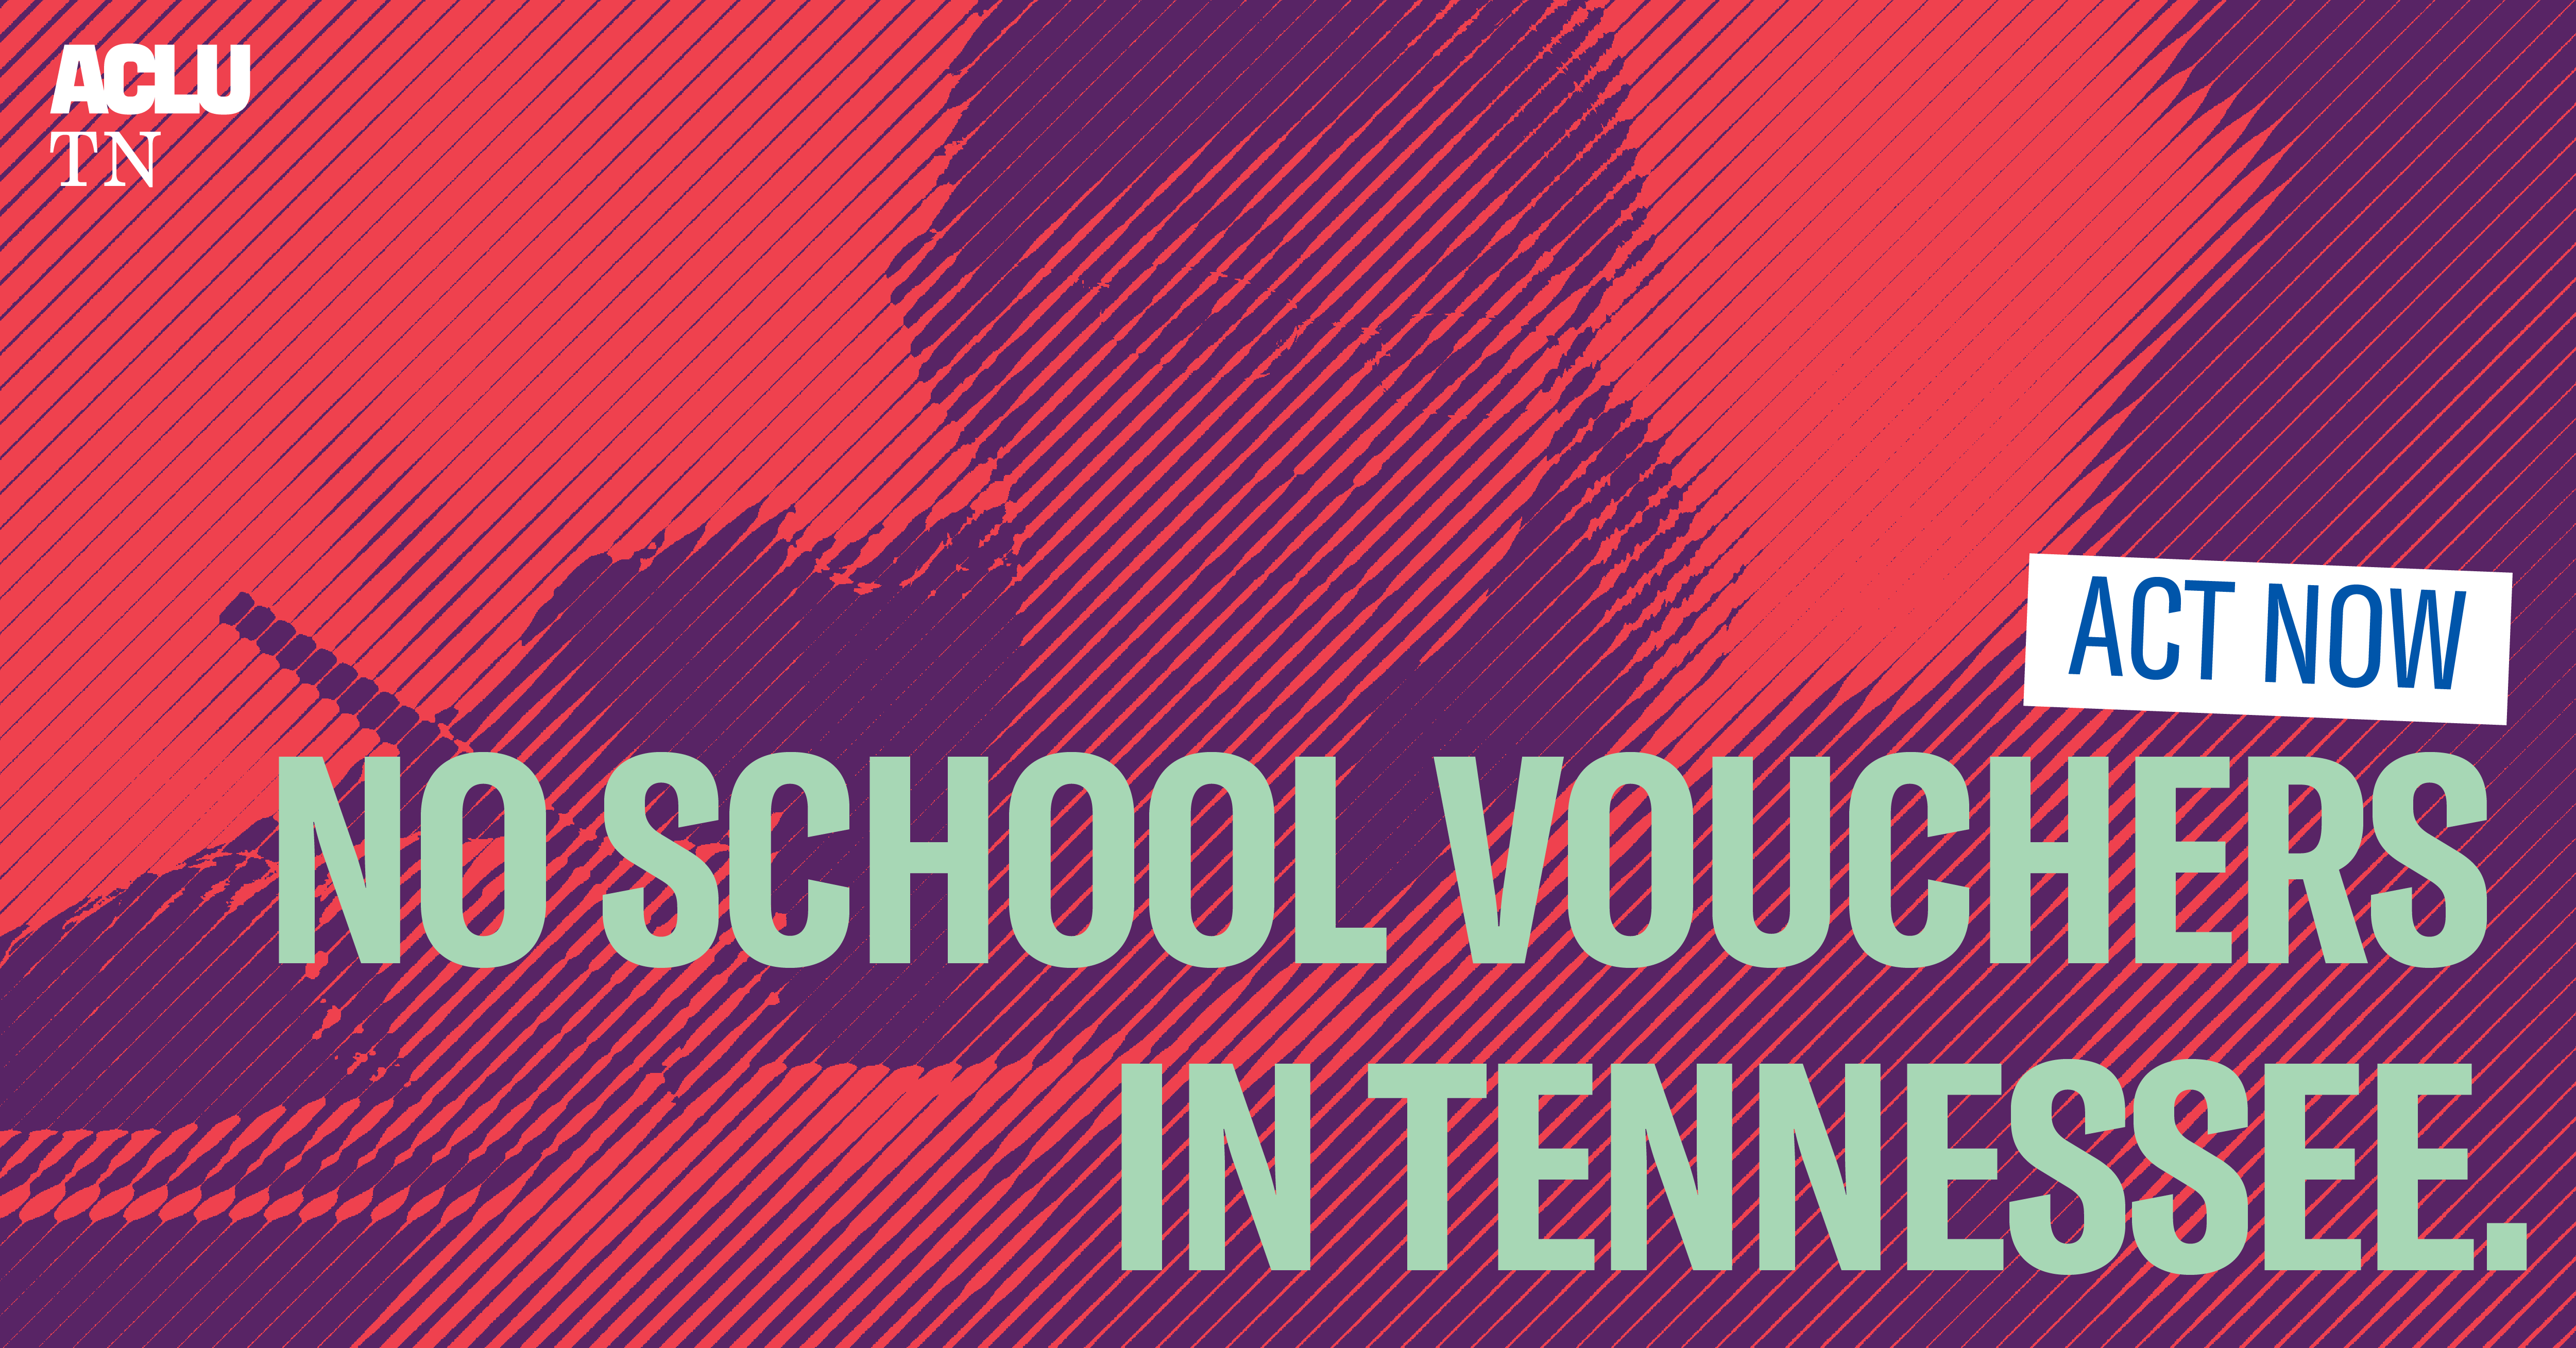 Stop school vouchers in Tennessee American Civil Liberties Union